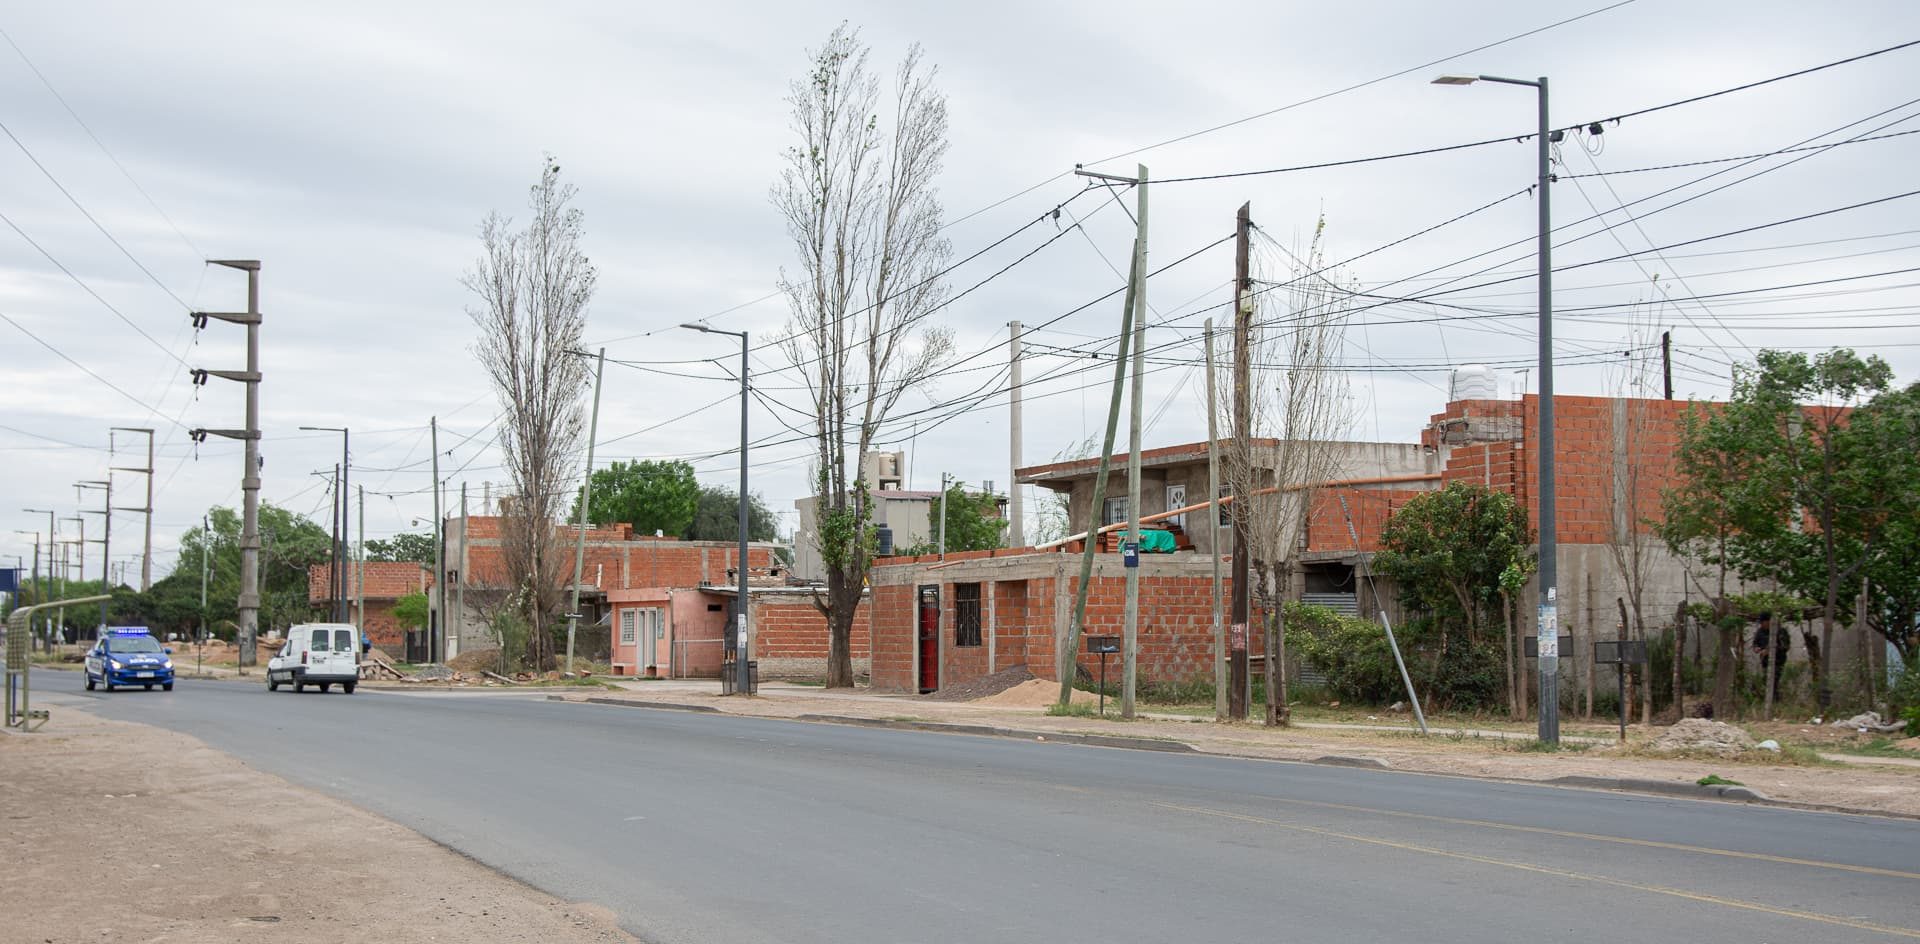 Creció más del doble la superficie de los barrios vulnerables en Córdoba